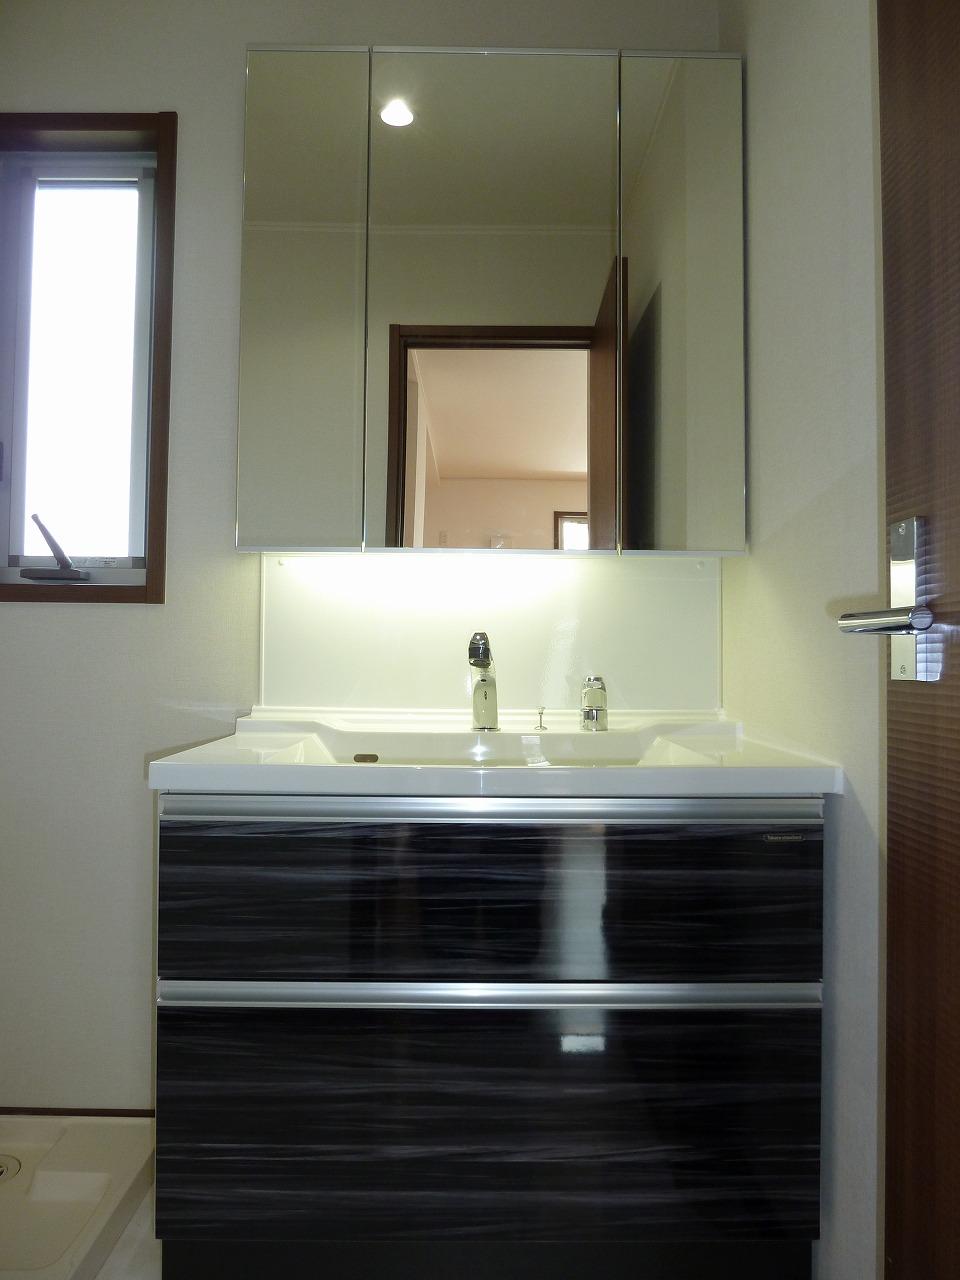 Wash basin, toilet. Wide vanity mirror finish classy